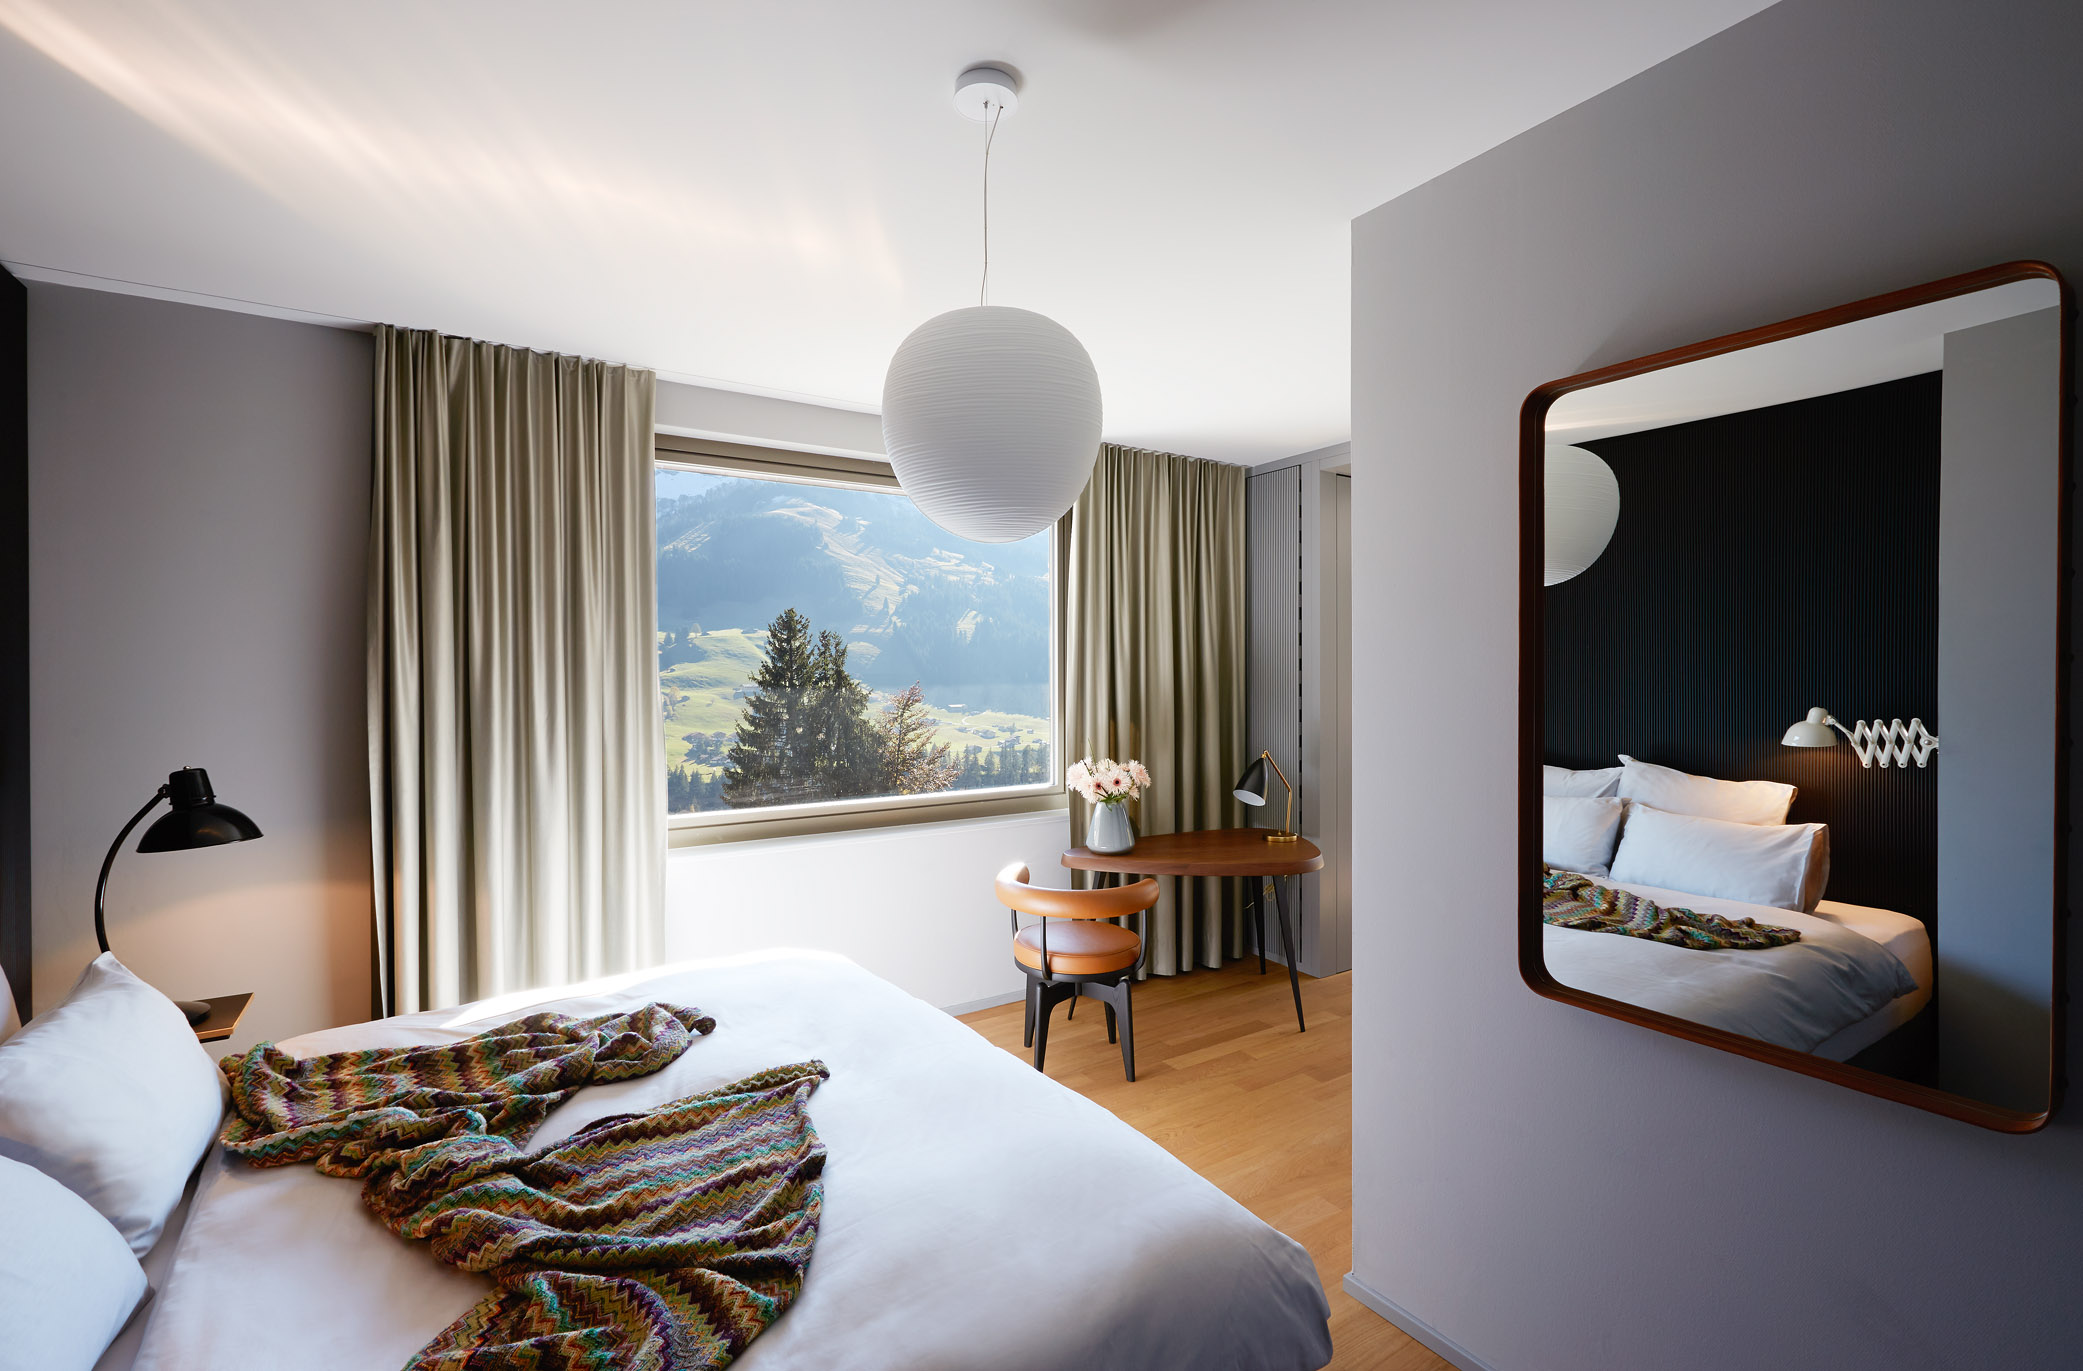 Bellevue Parkhotel & Spa, Adelboden, tn hotel consulting, tomas niederberghaus, hotel pr